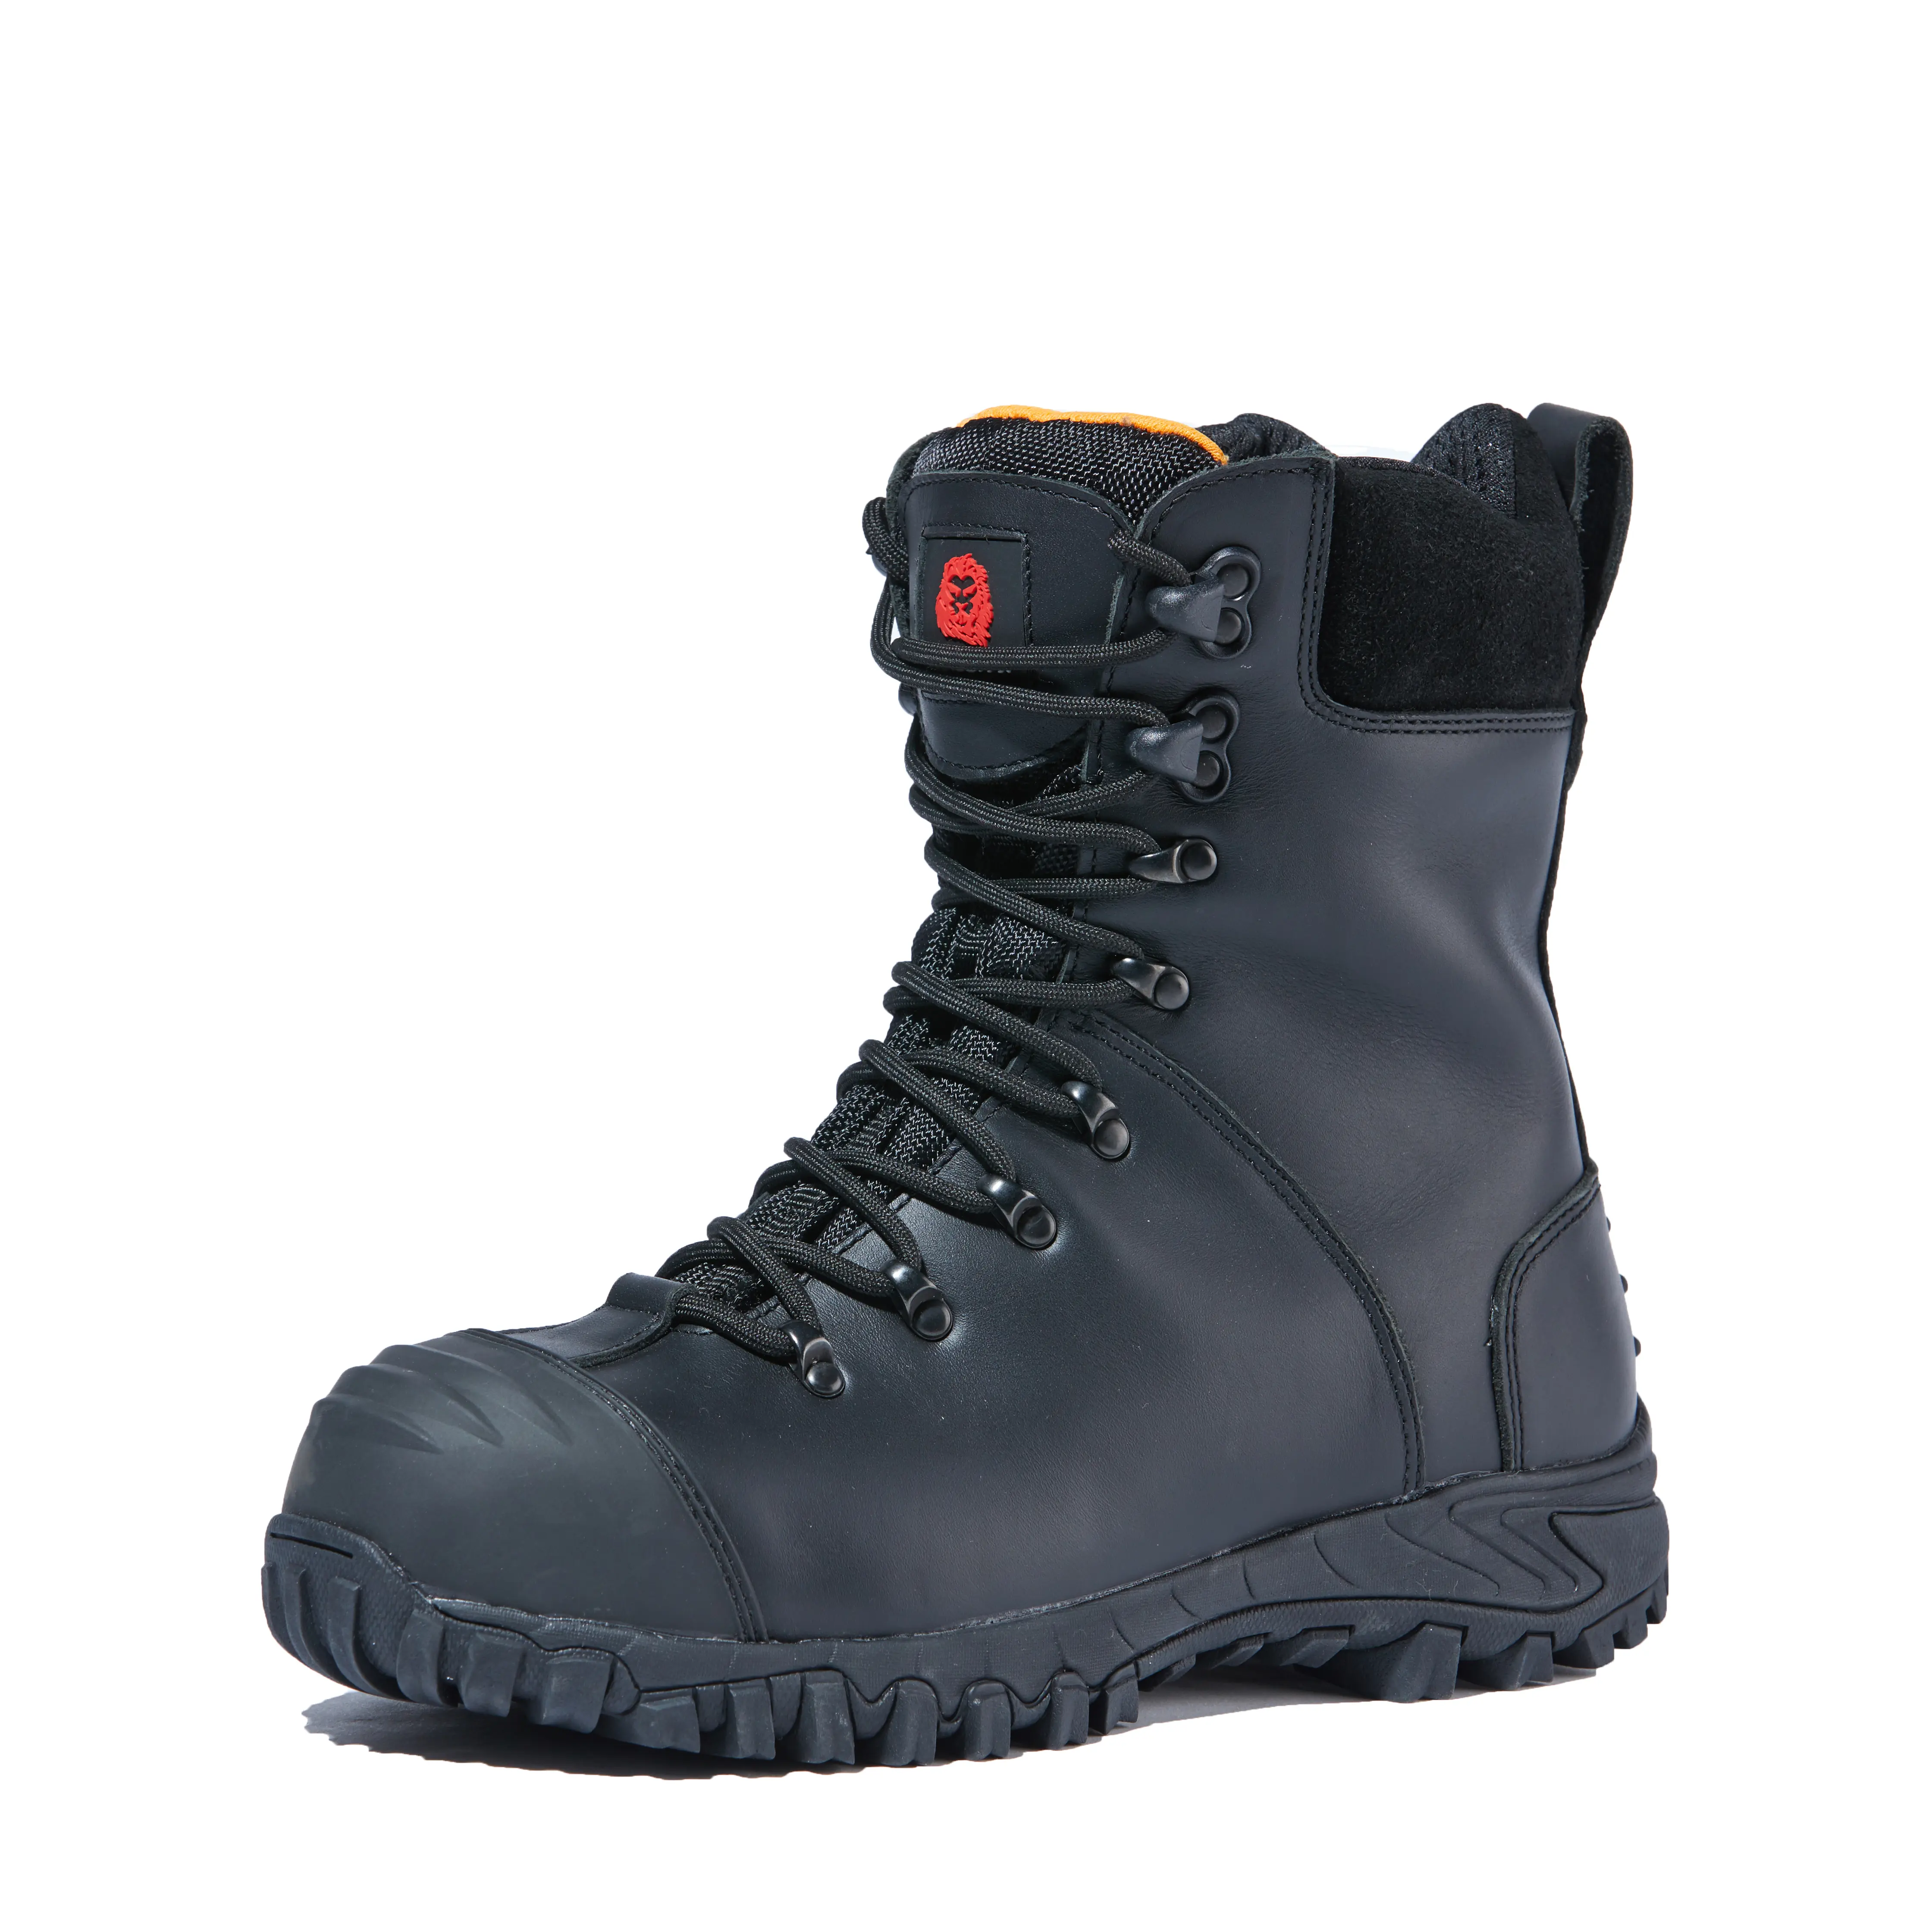 North Face Men's Boots Waterproof